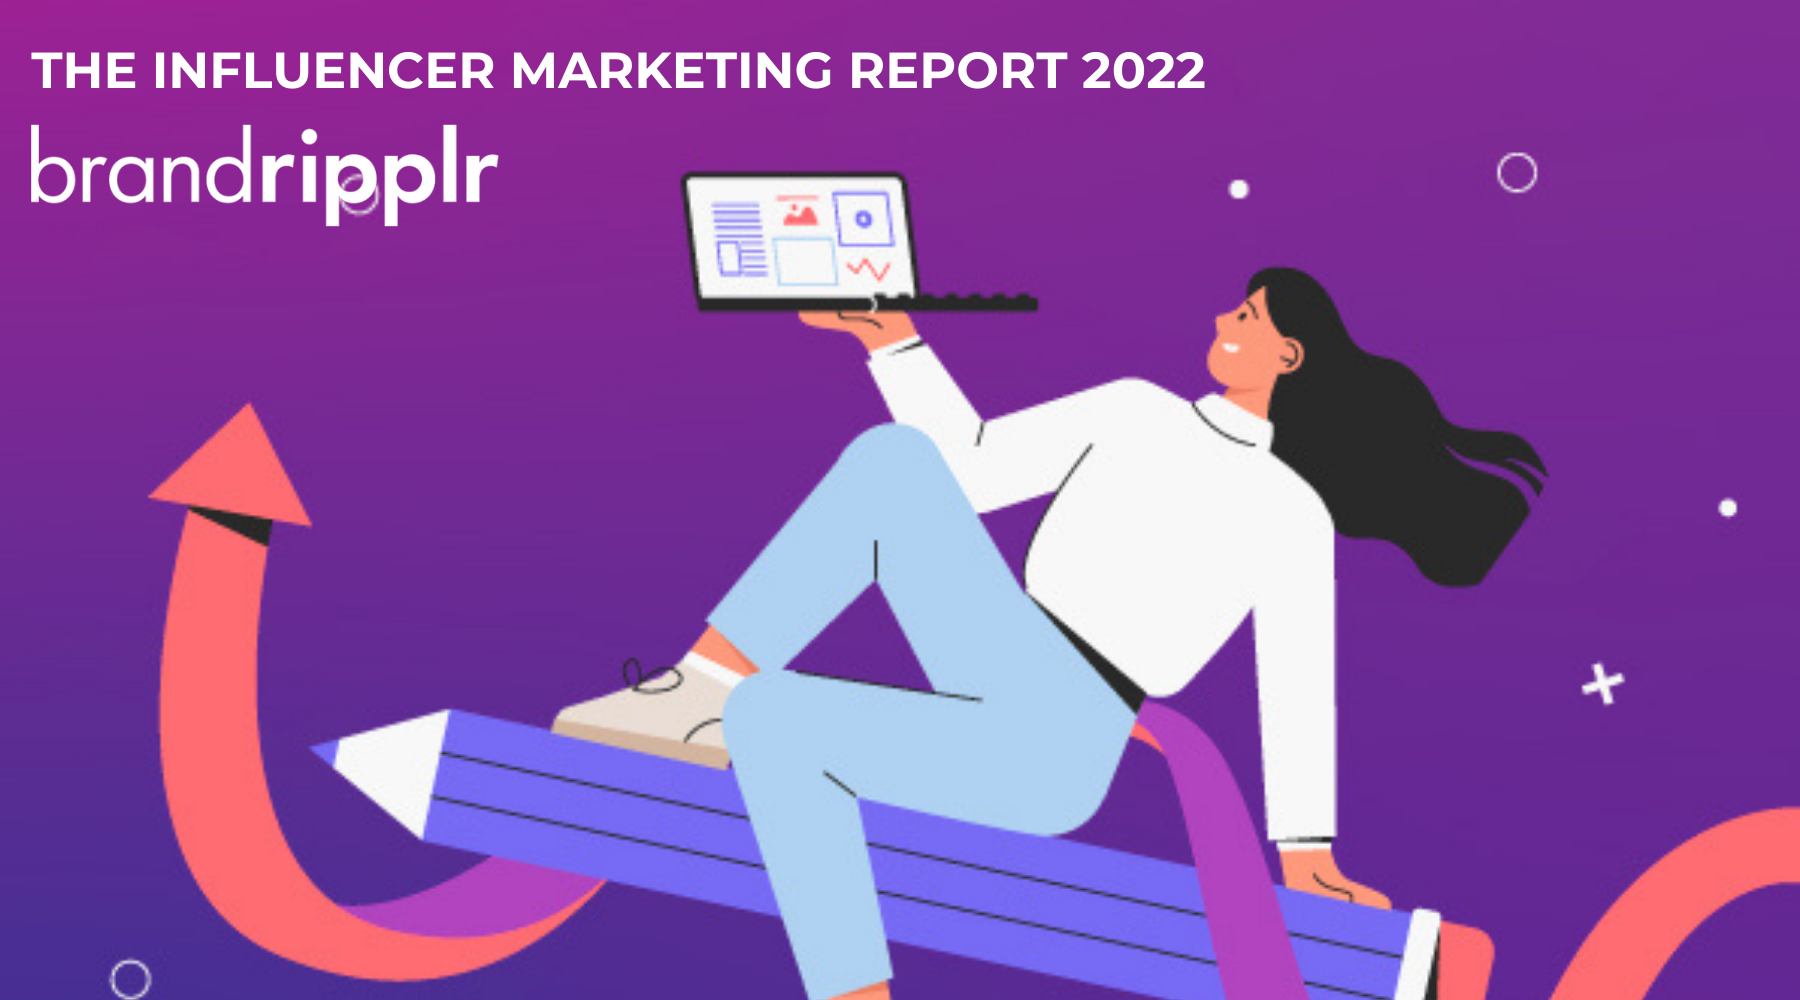 BrandRipplr Reveals the Top Influencer Marketing Trends in 2022